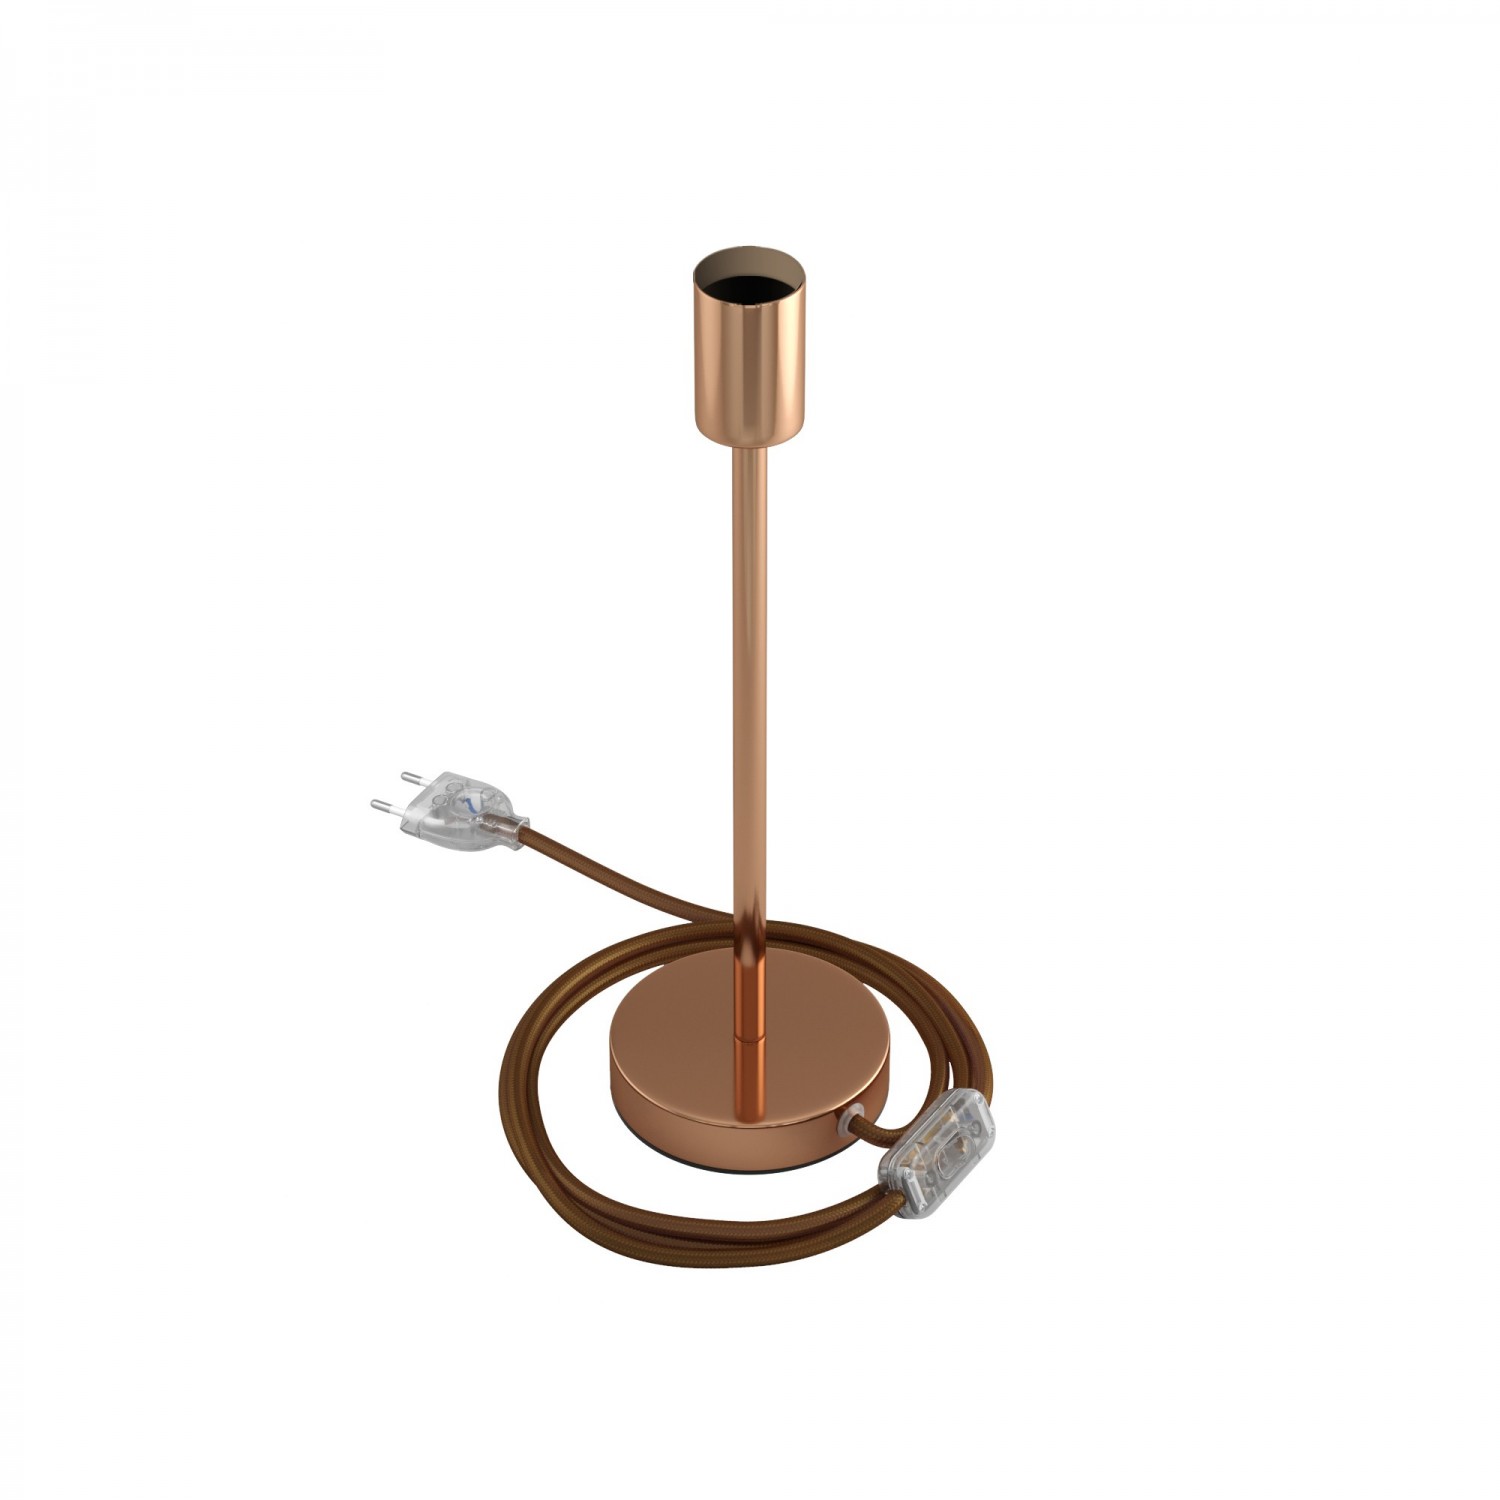 Alzaluce - Metal table lamp with two-pin plug